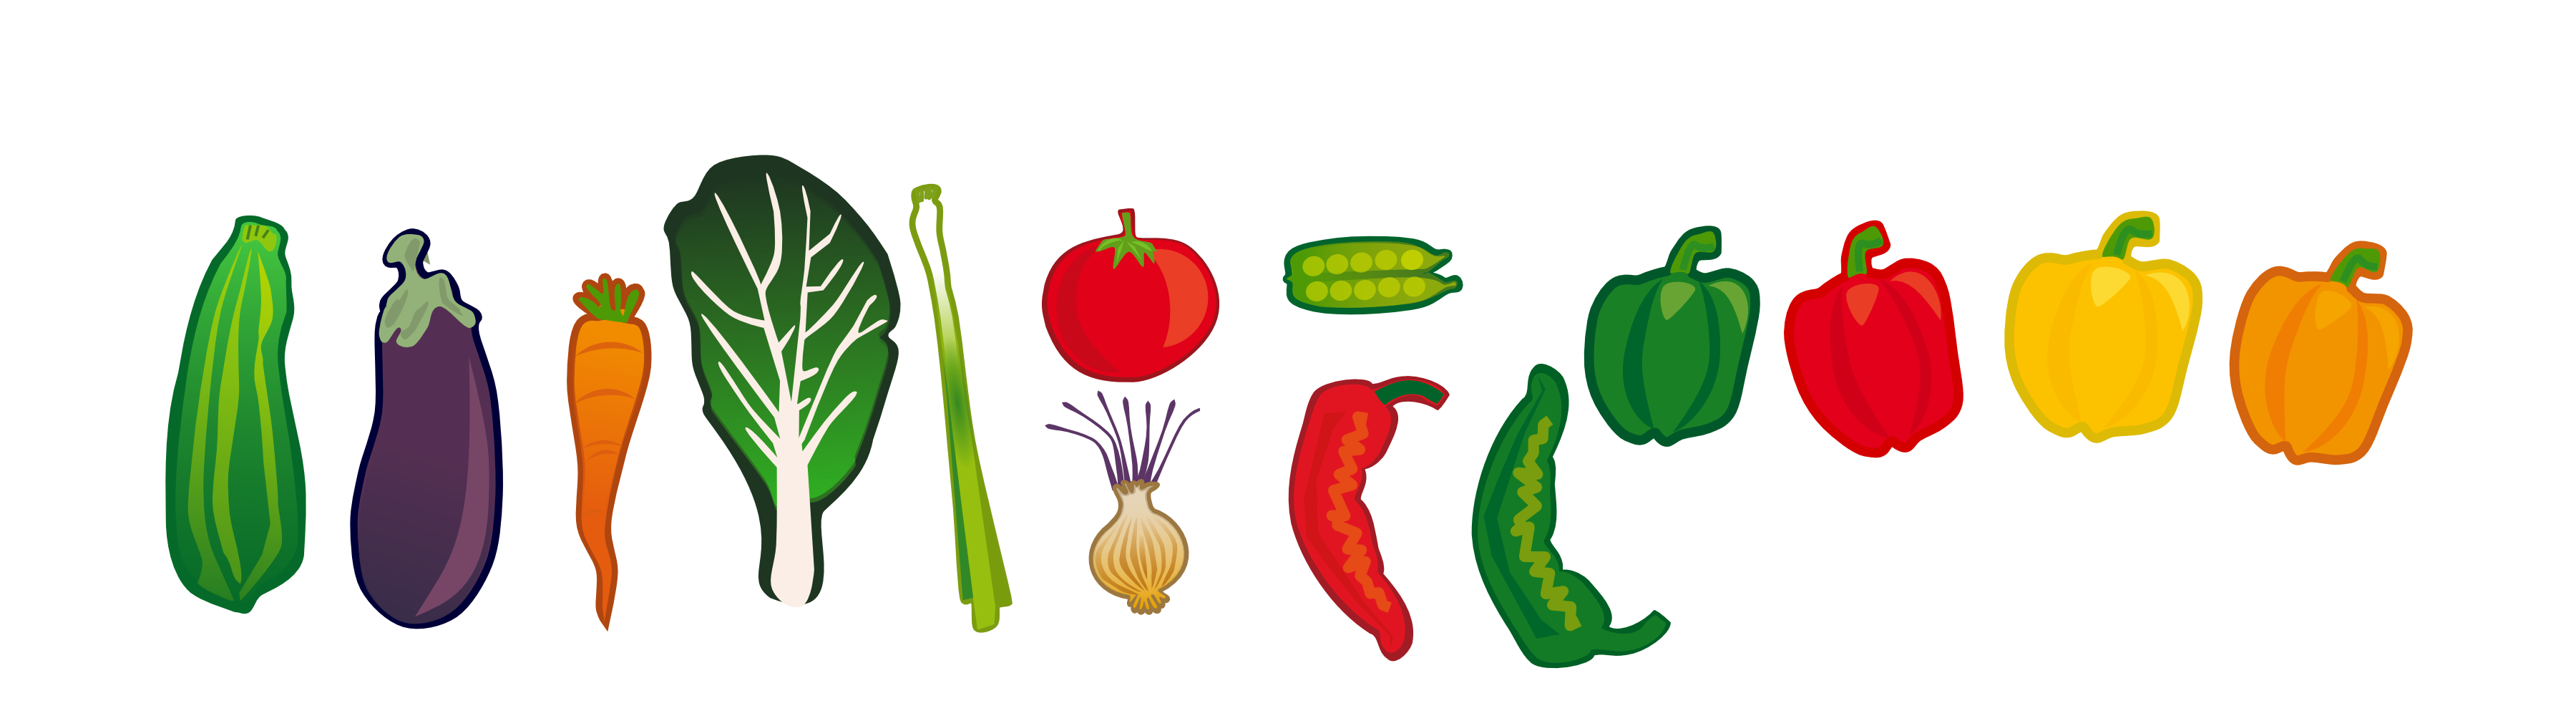 Vegetables clip art 3